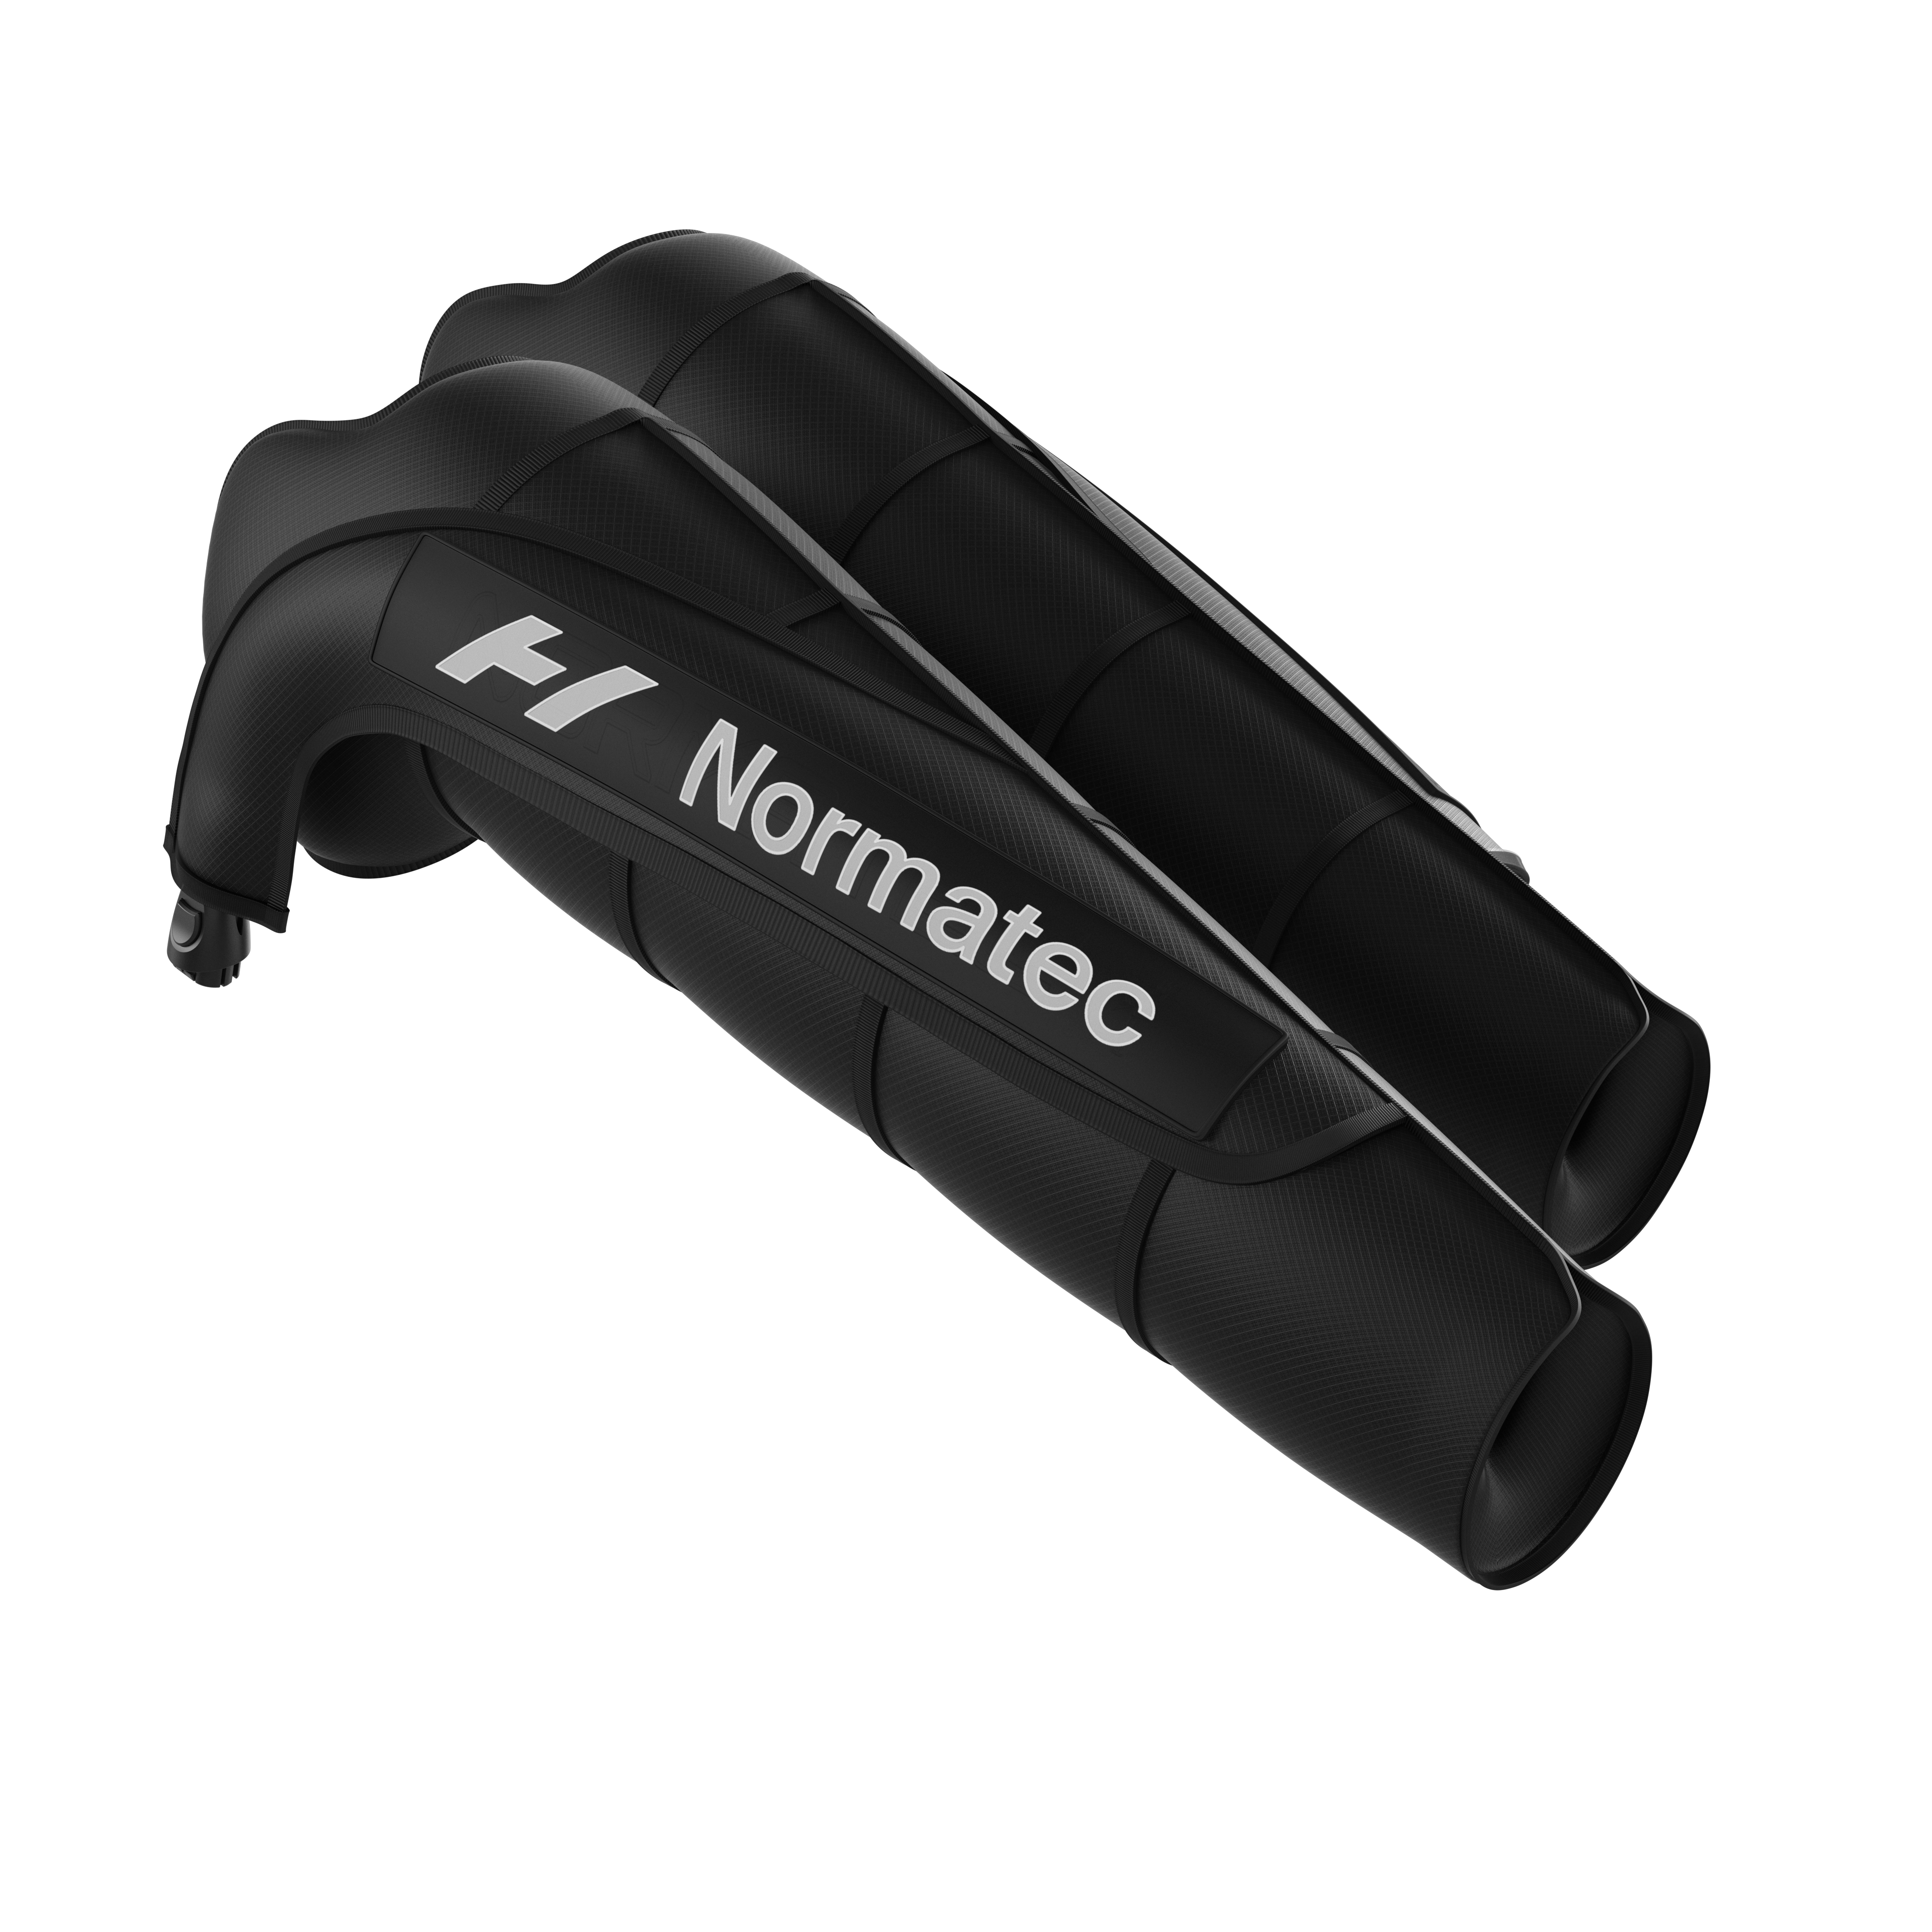 Hyperice Normatec 3 Arm Attachments thumbnail